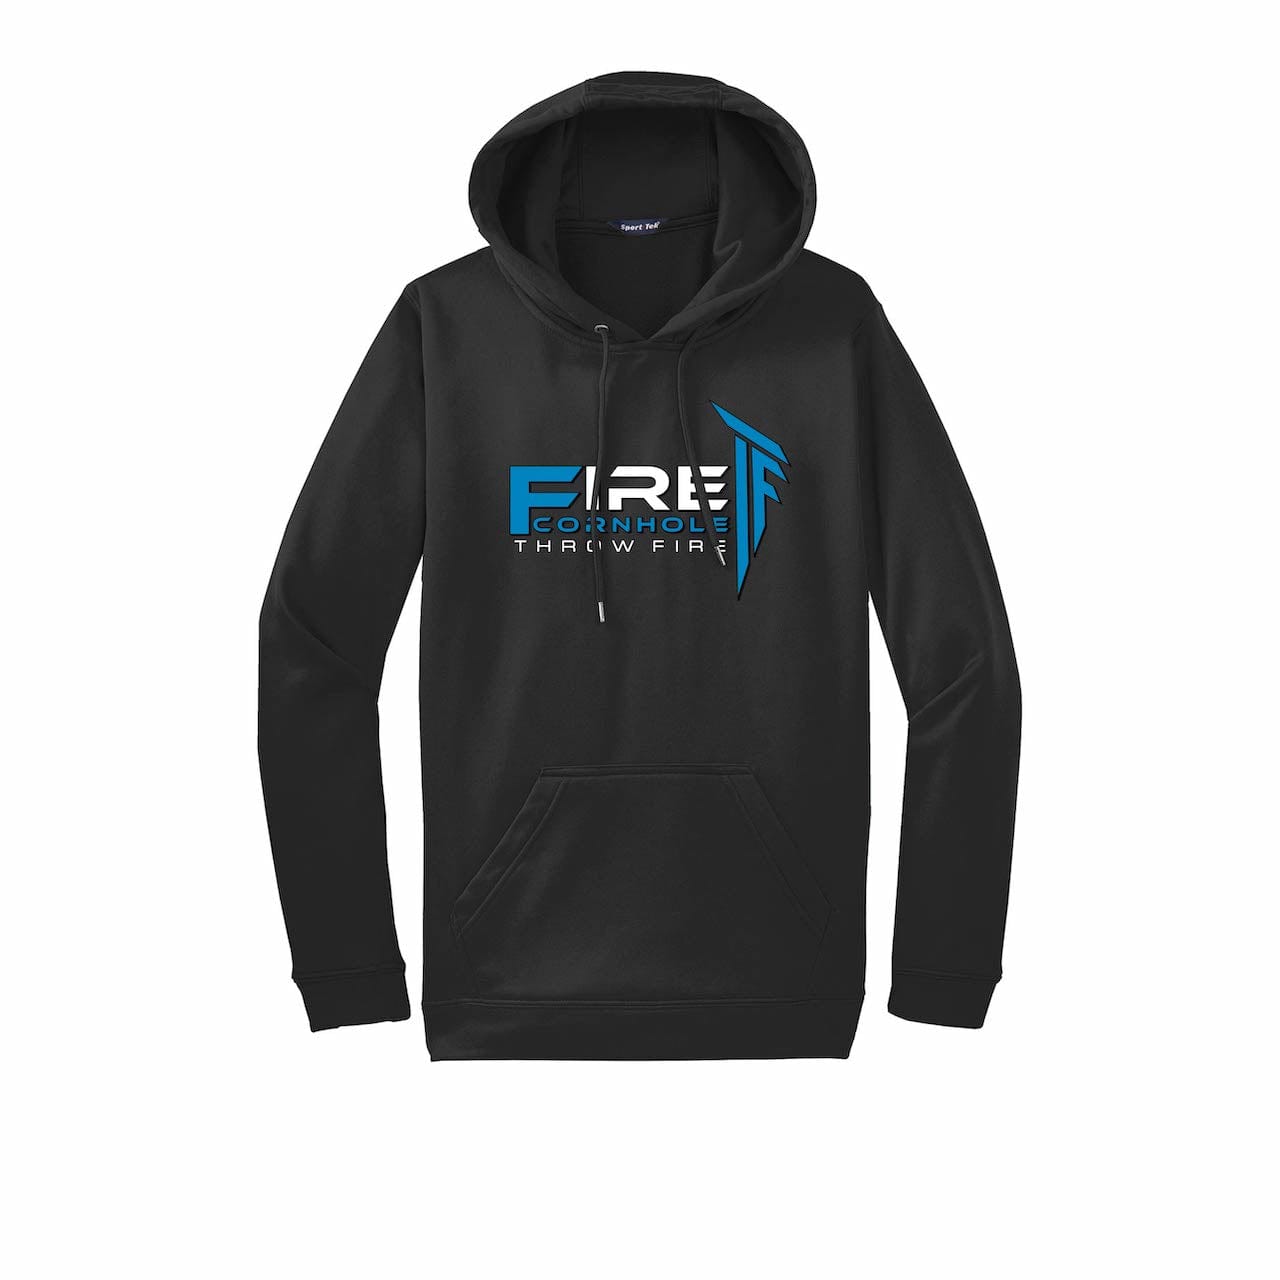 Black hoodie with blue Fire Cornhole logo